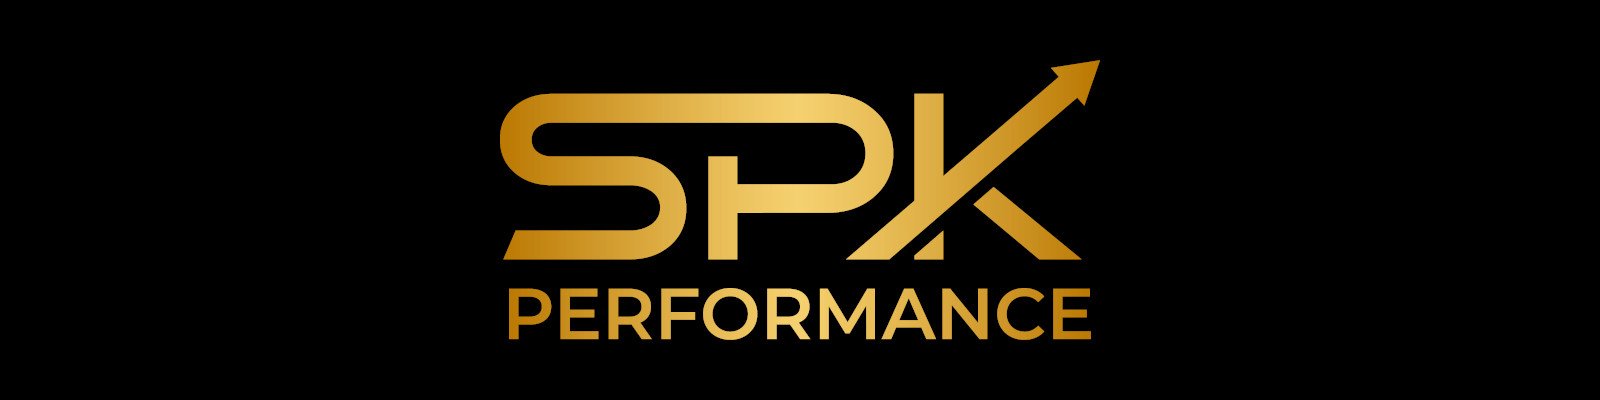 SPK Performance logo